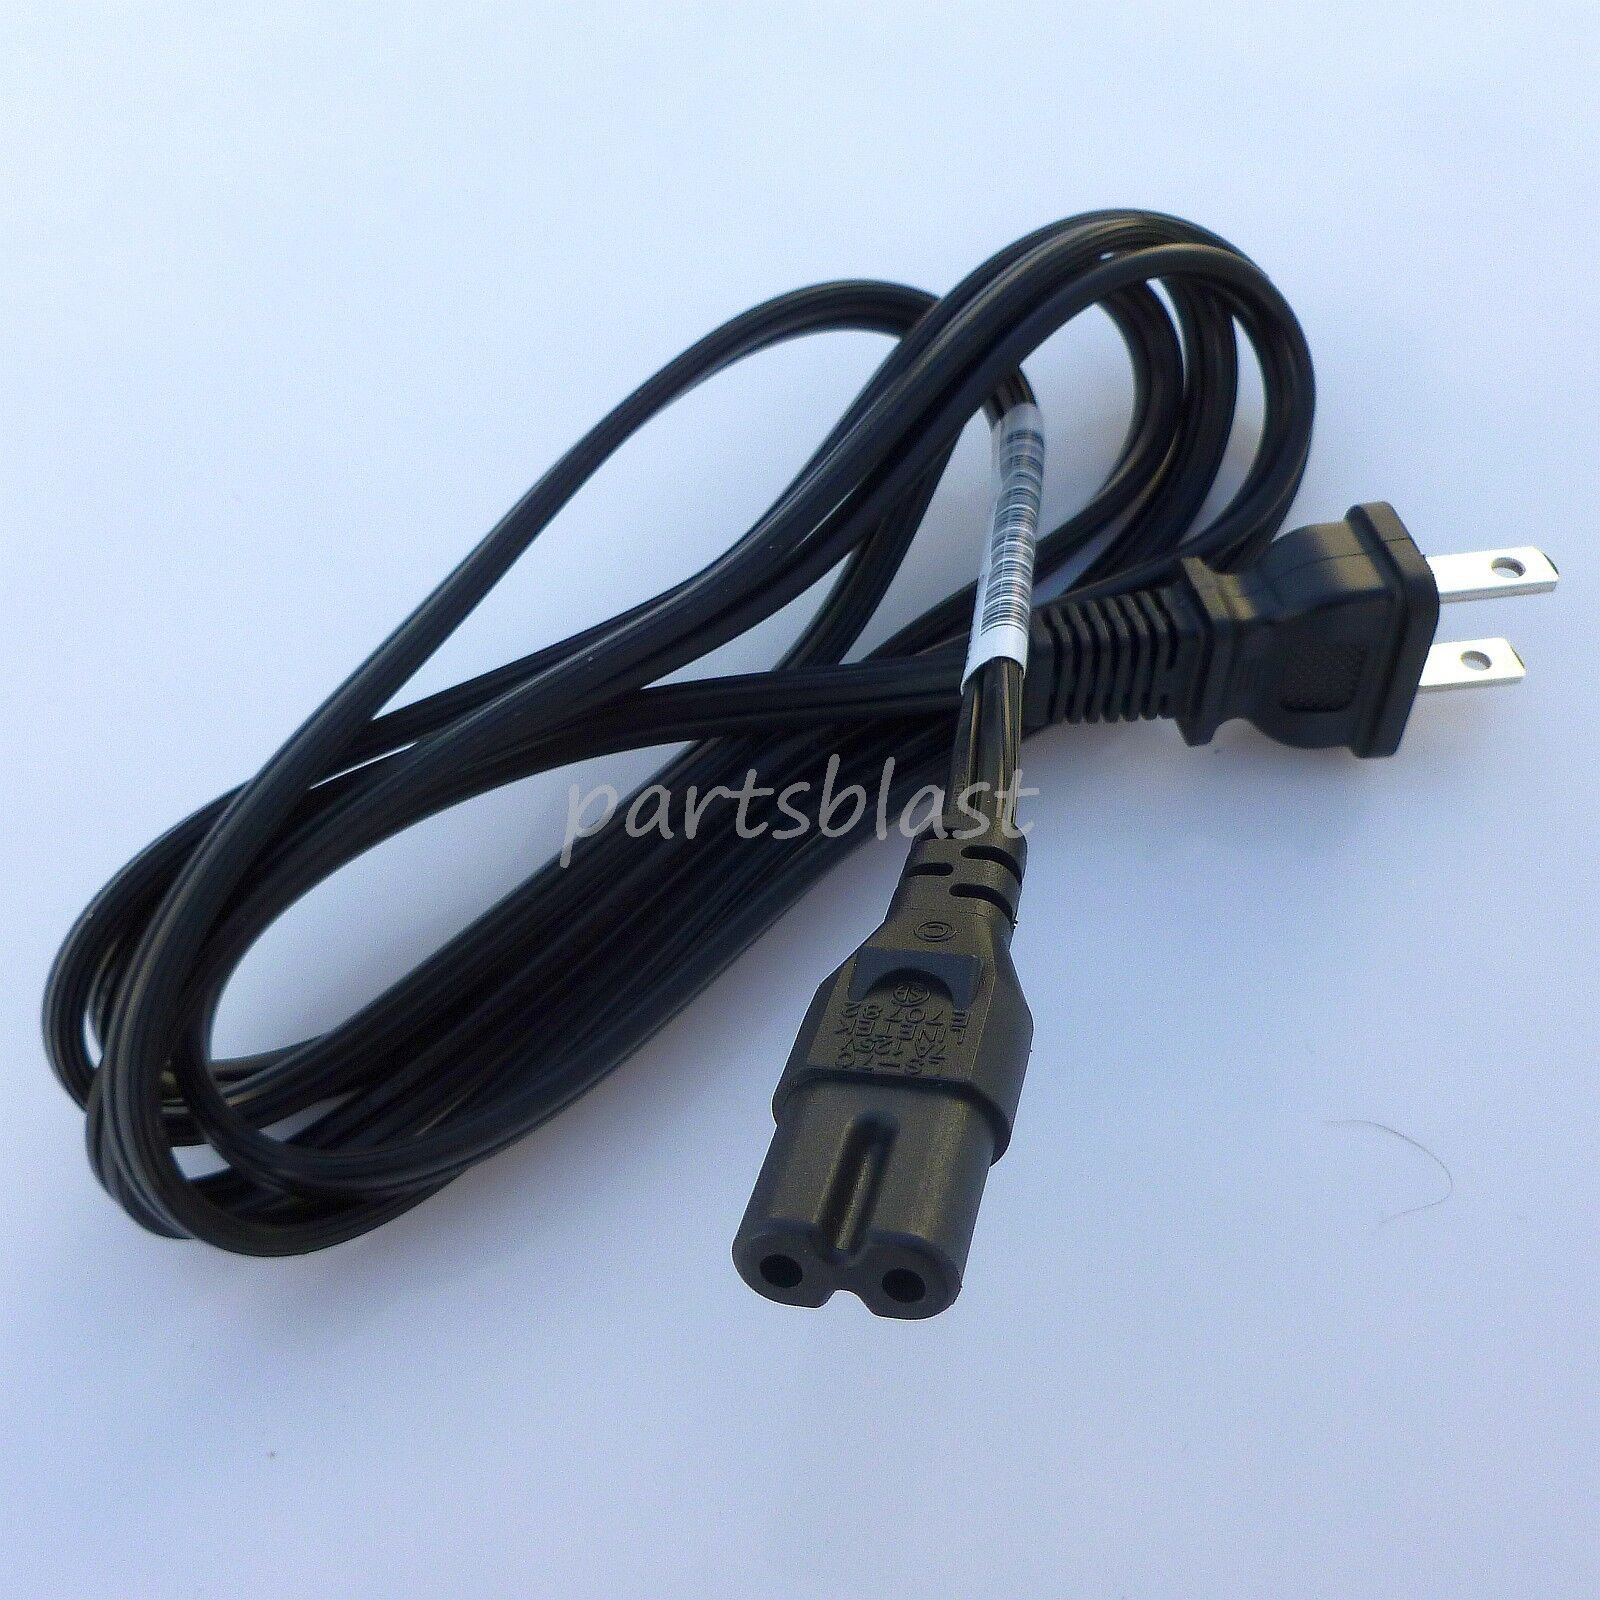 POWER CORD fits EPSON XP440 XP446 XP830 Printer AC Cable plug Expression